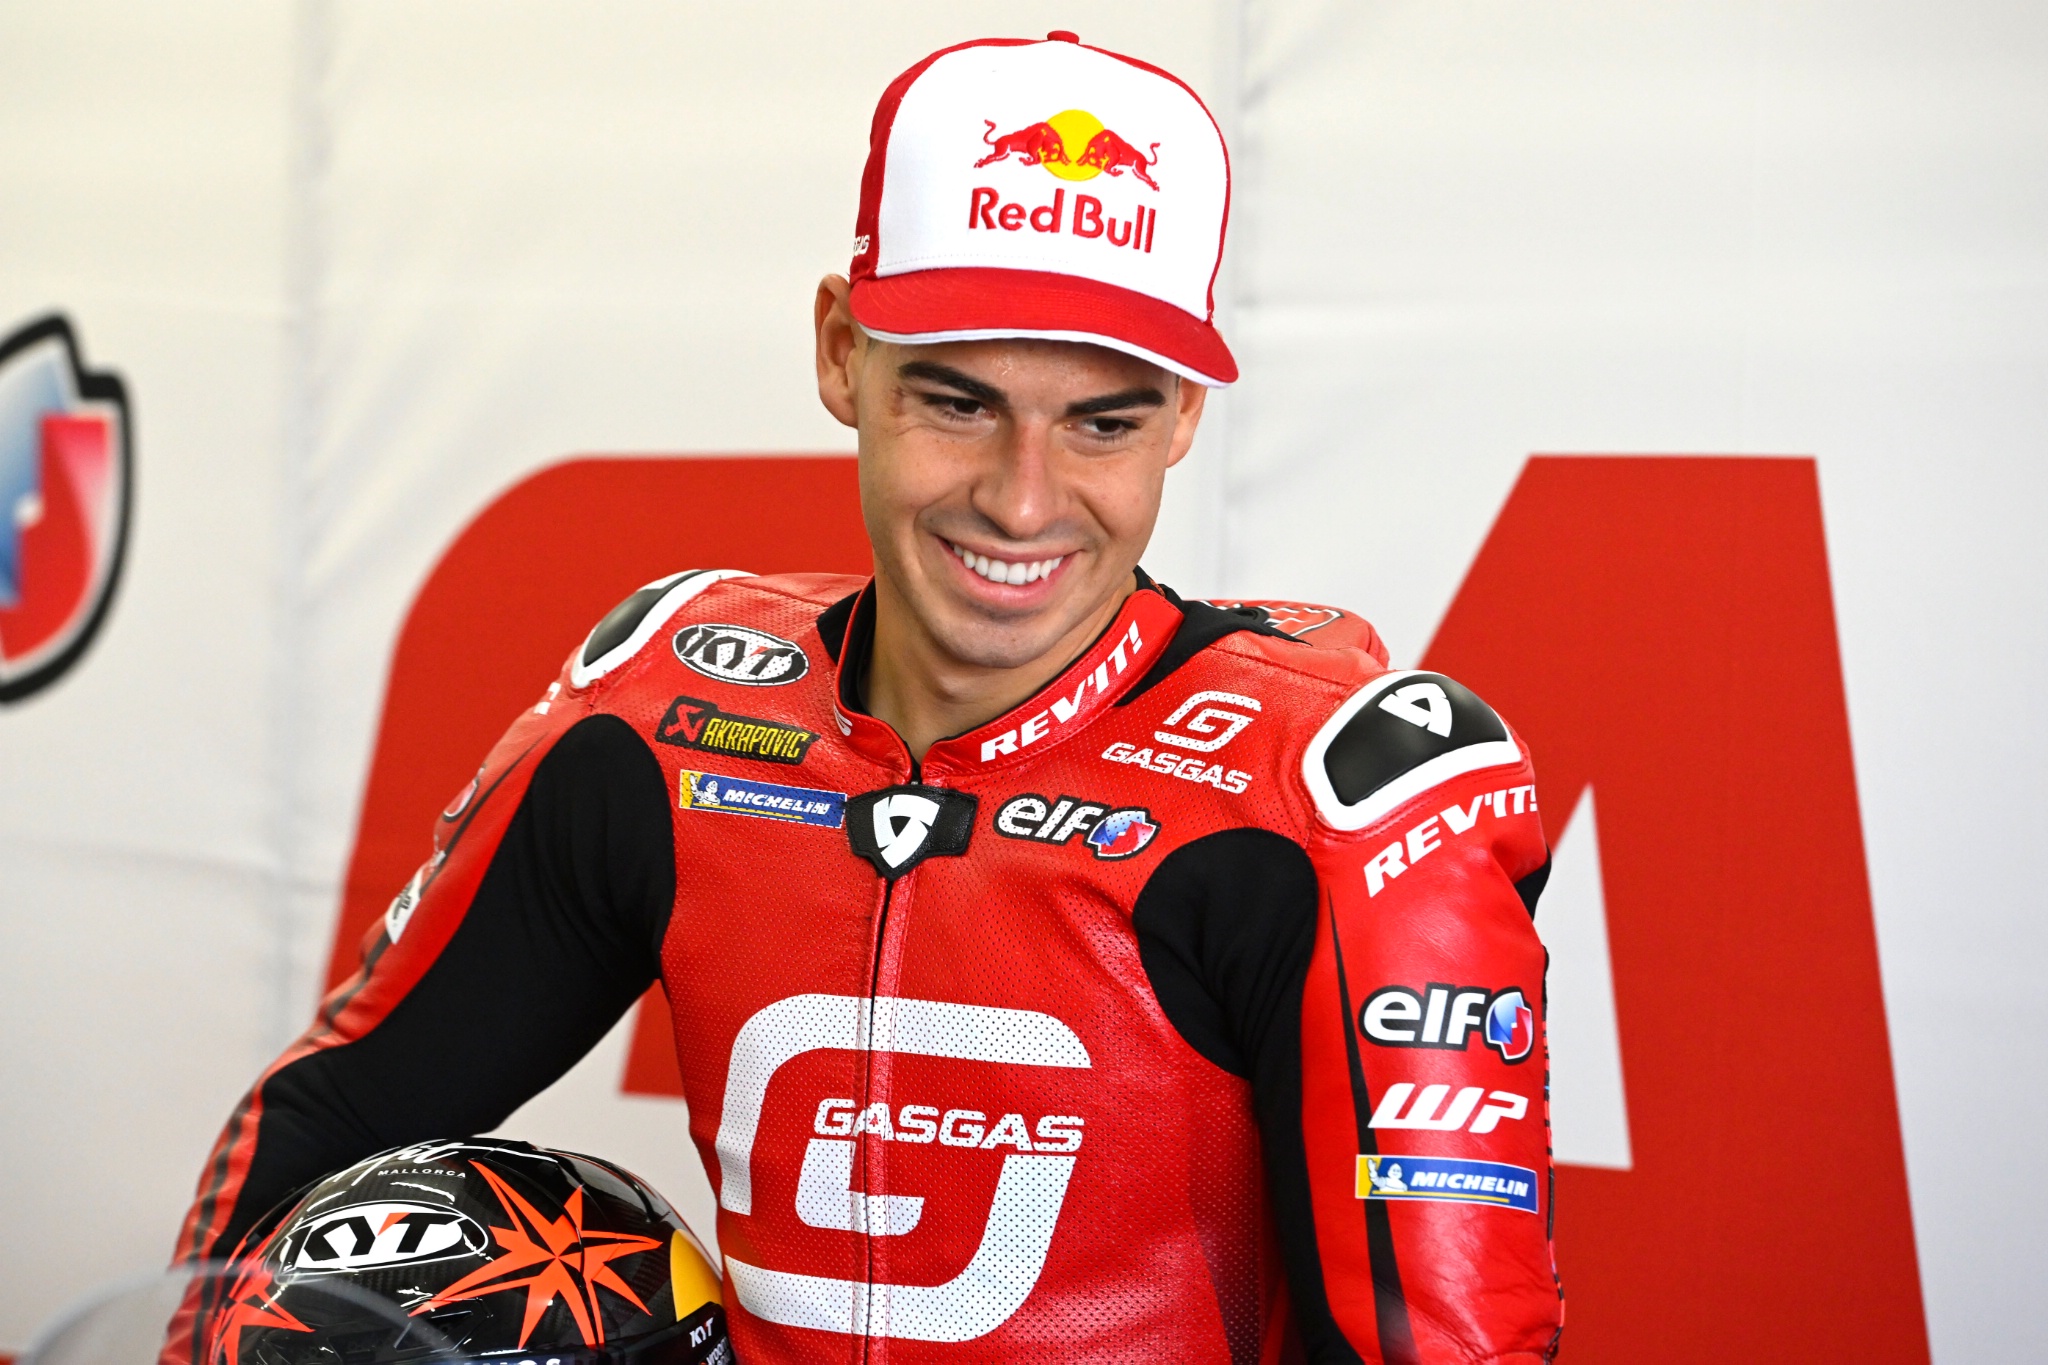 Augusto Fernandez, Valencia MotoGP test, 8 November